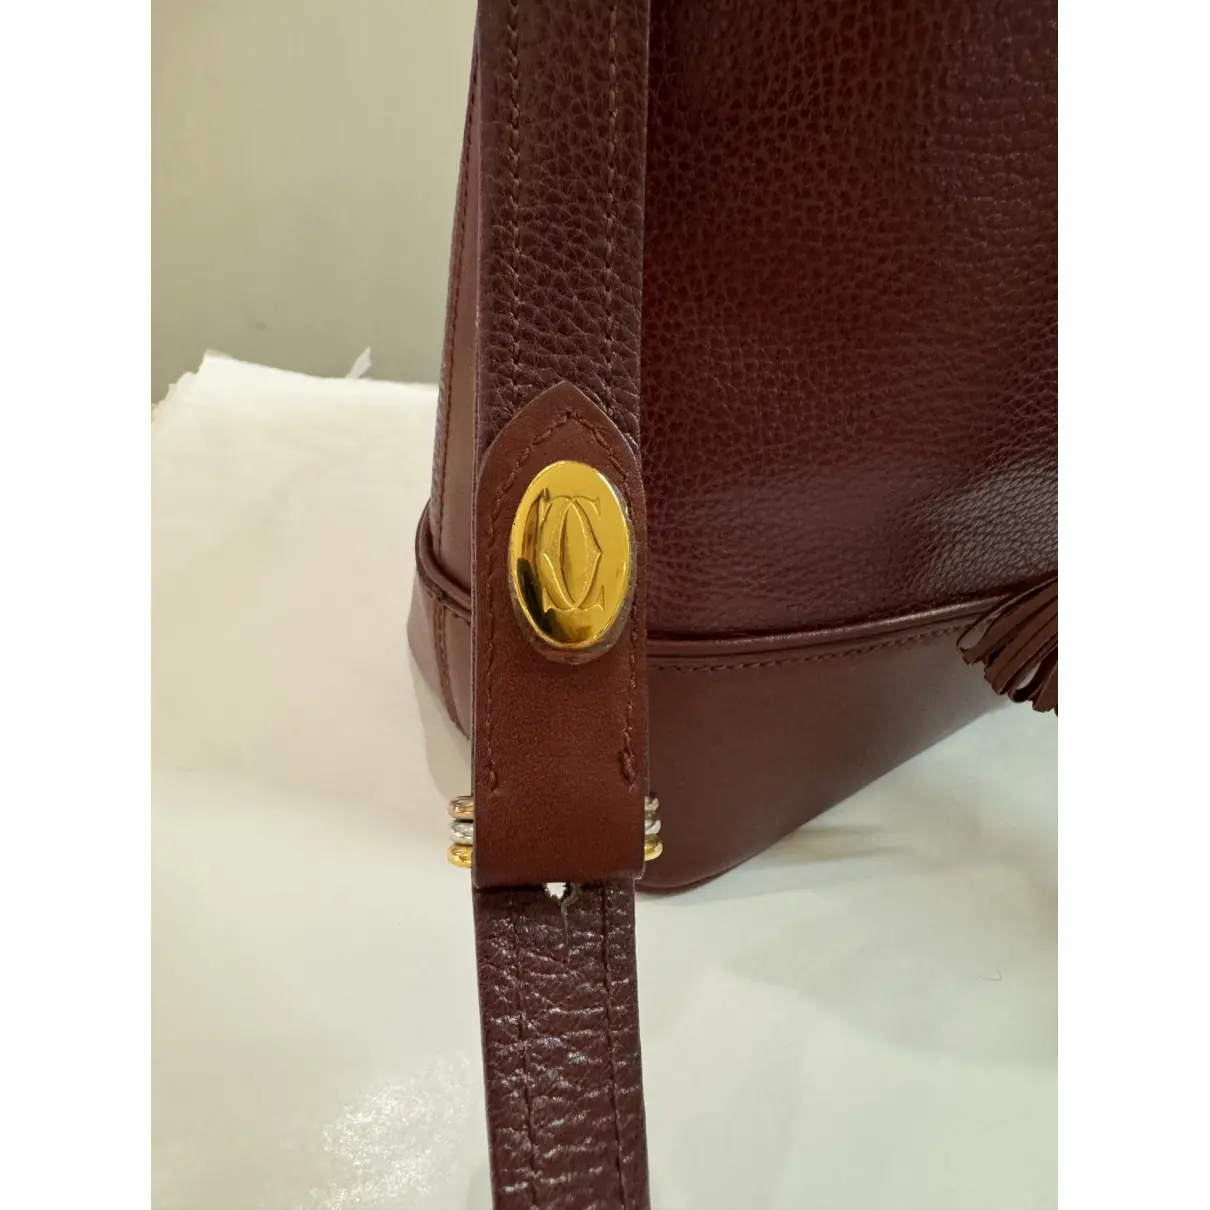 Leather crossbody bag Cartier - Vintage